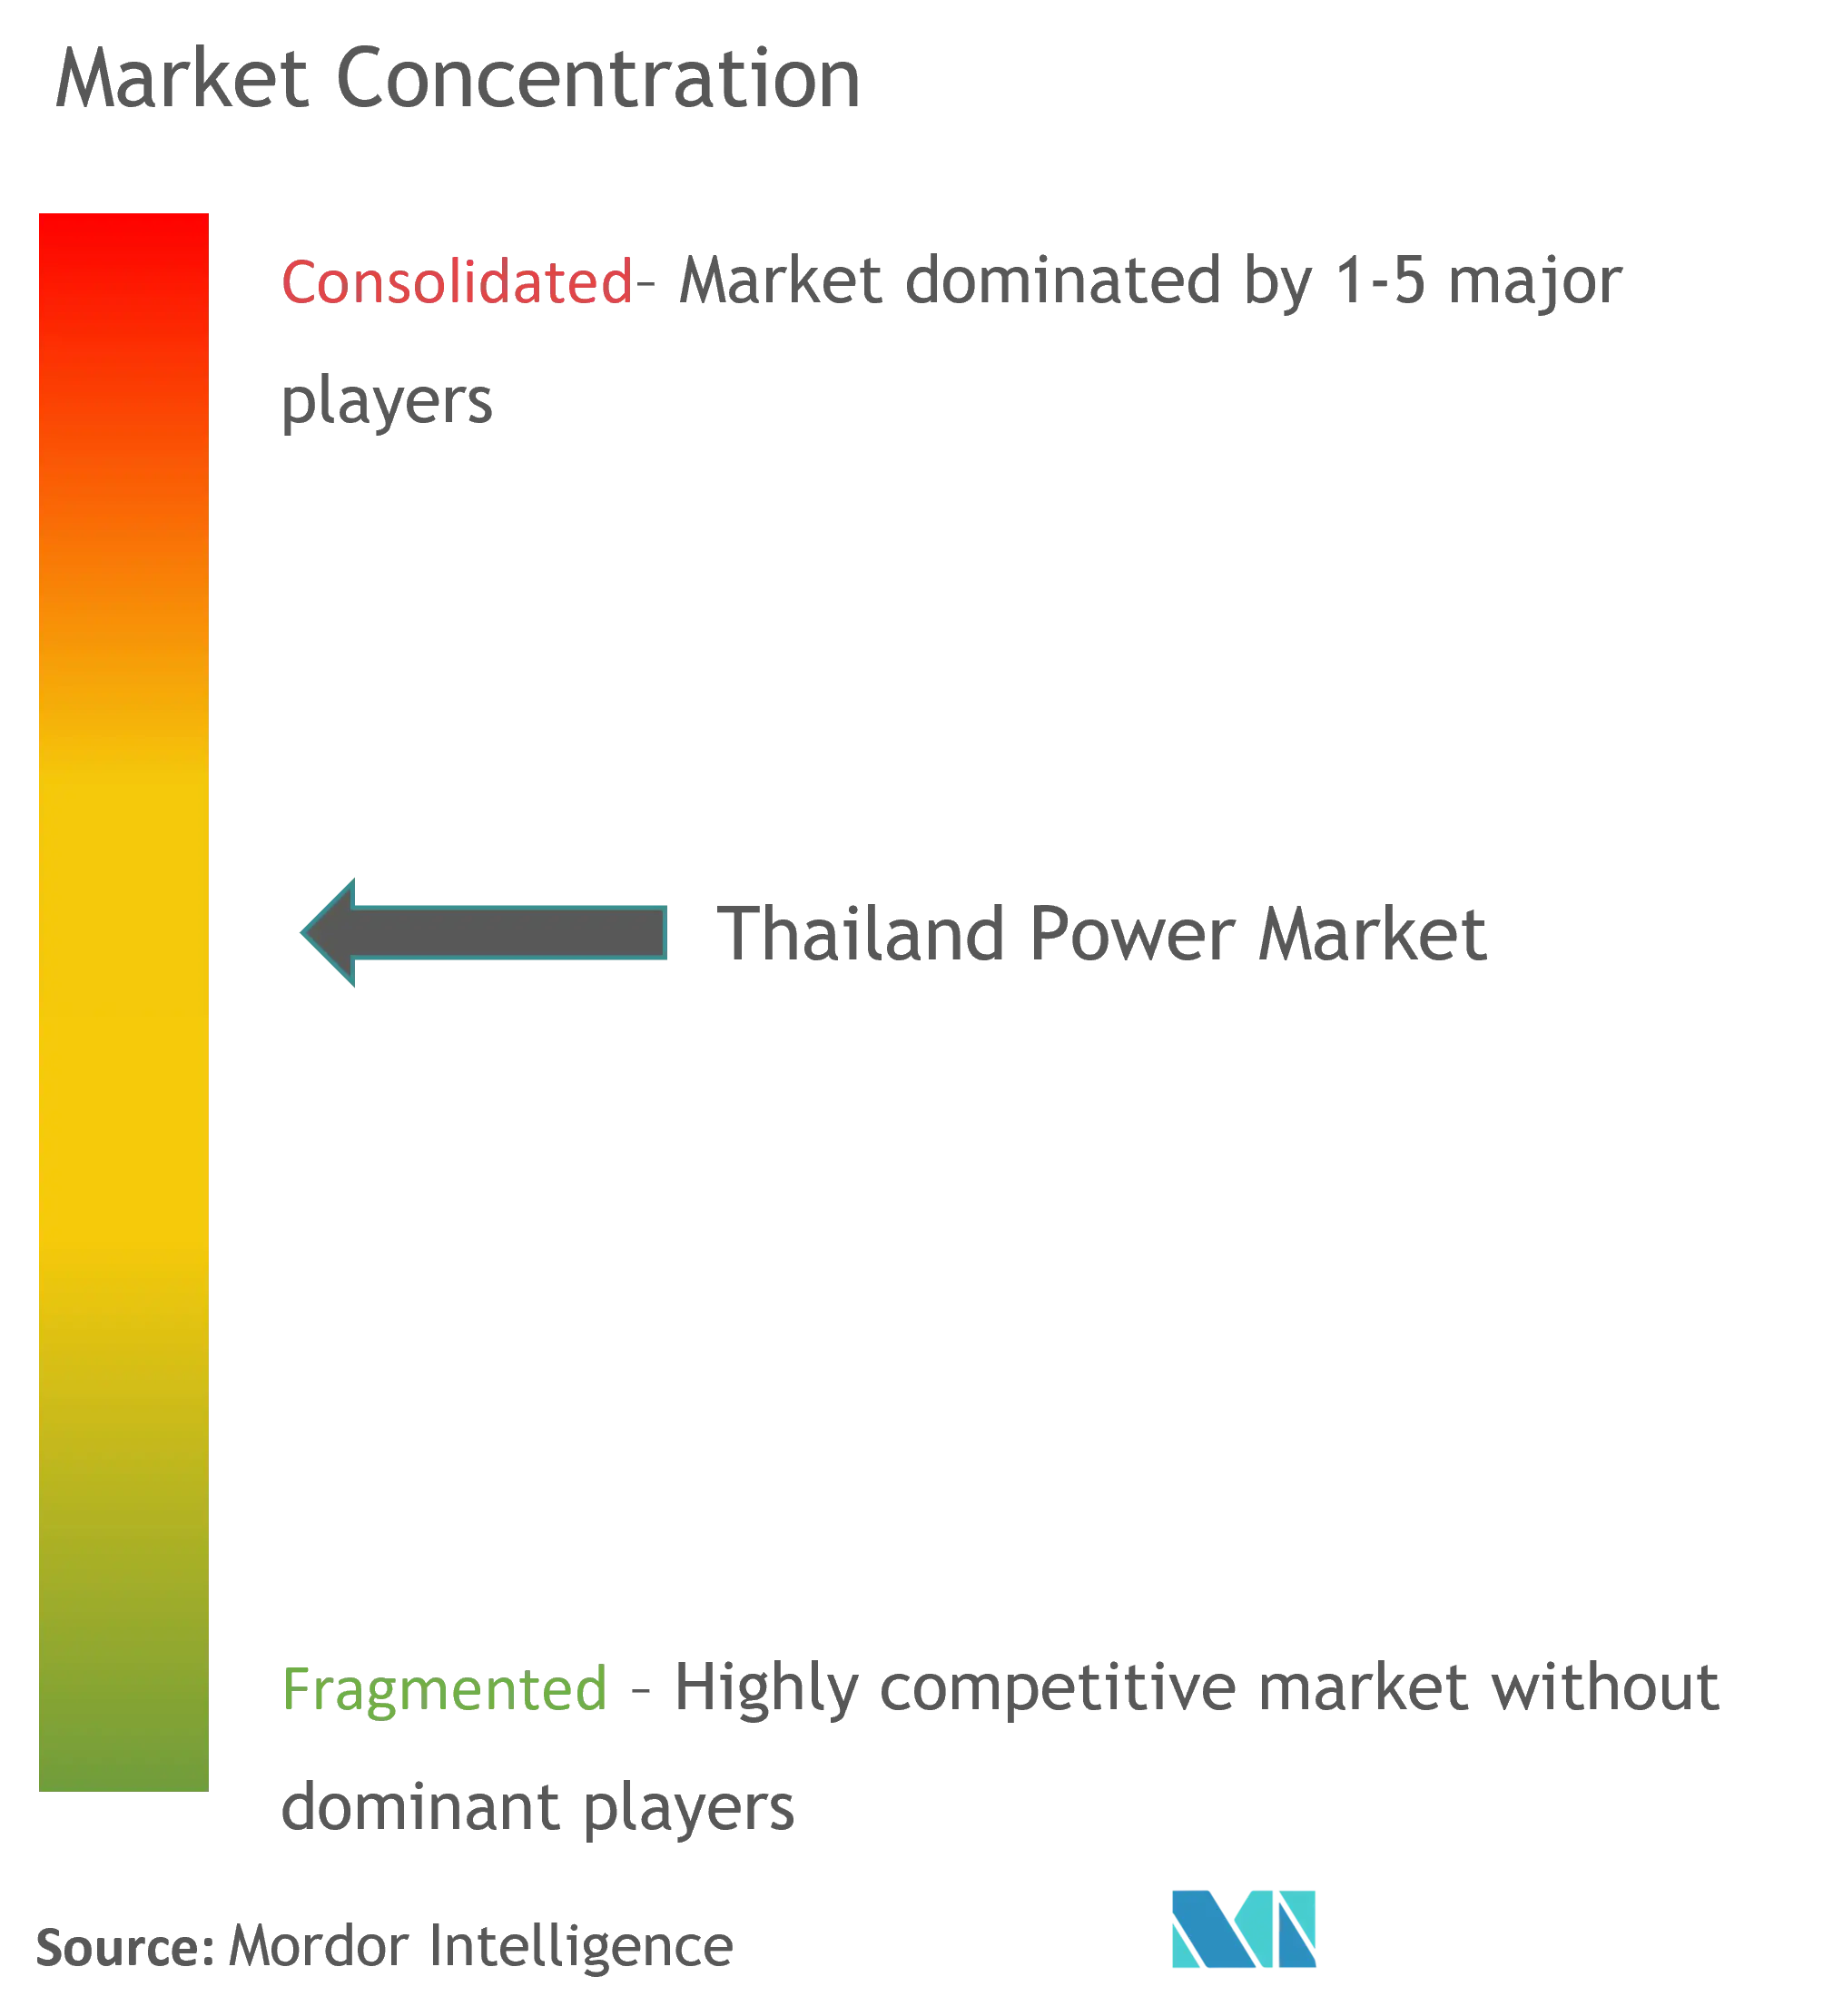 Market Concentration-Thailand Power Market.png